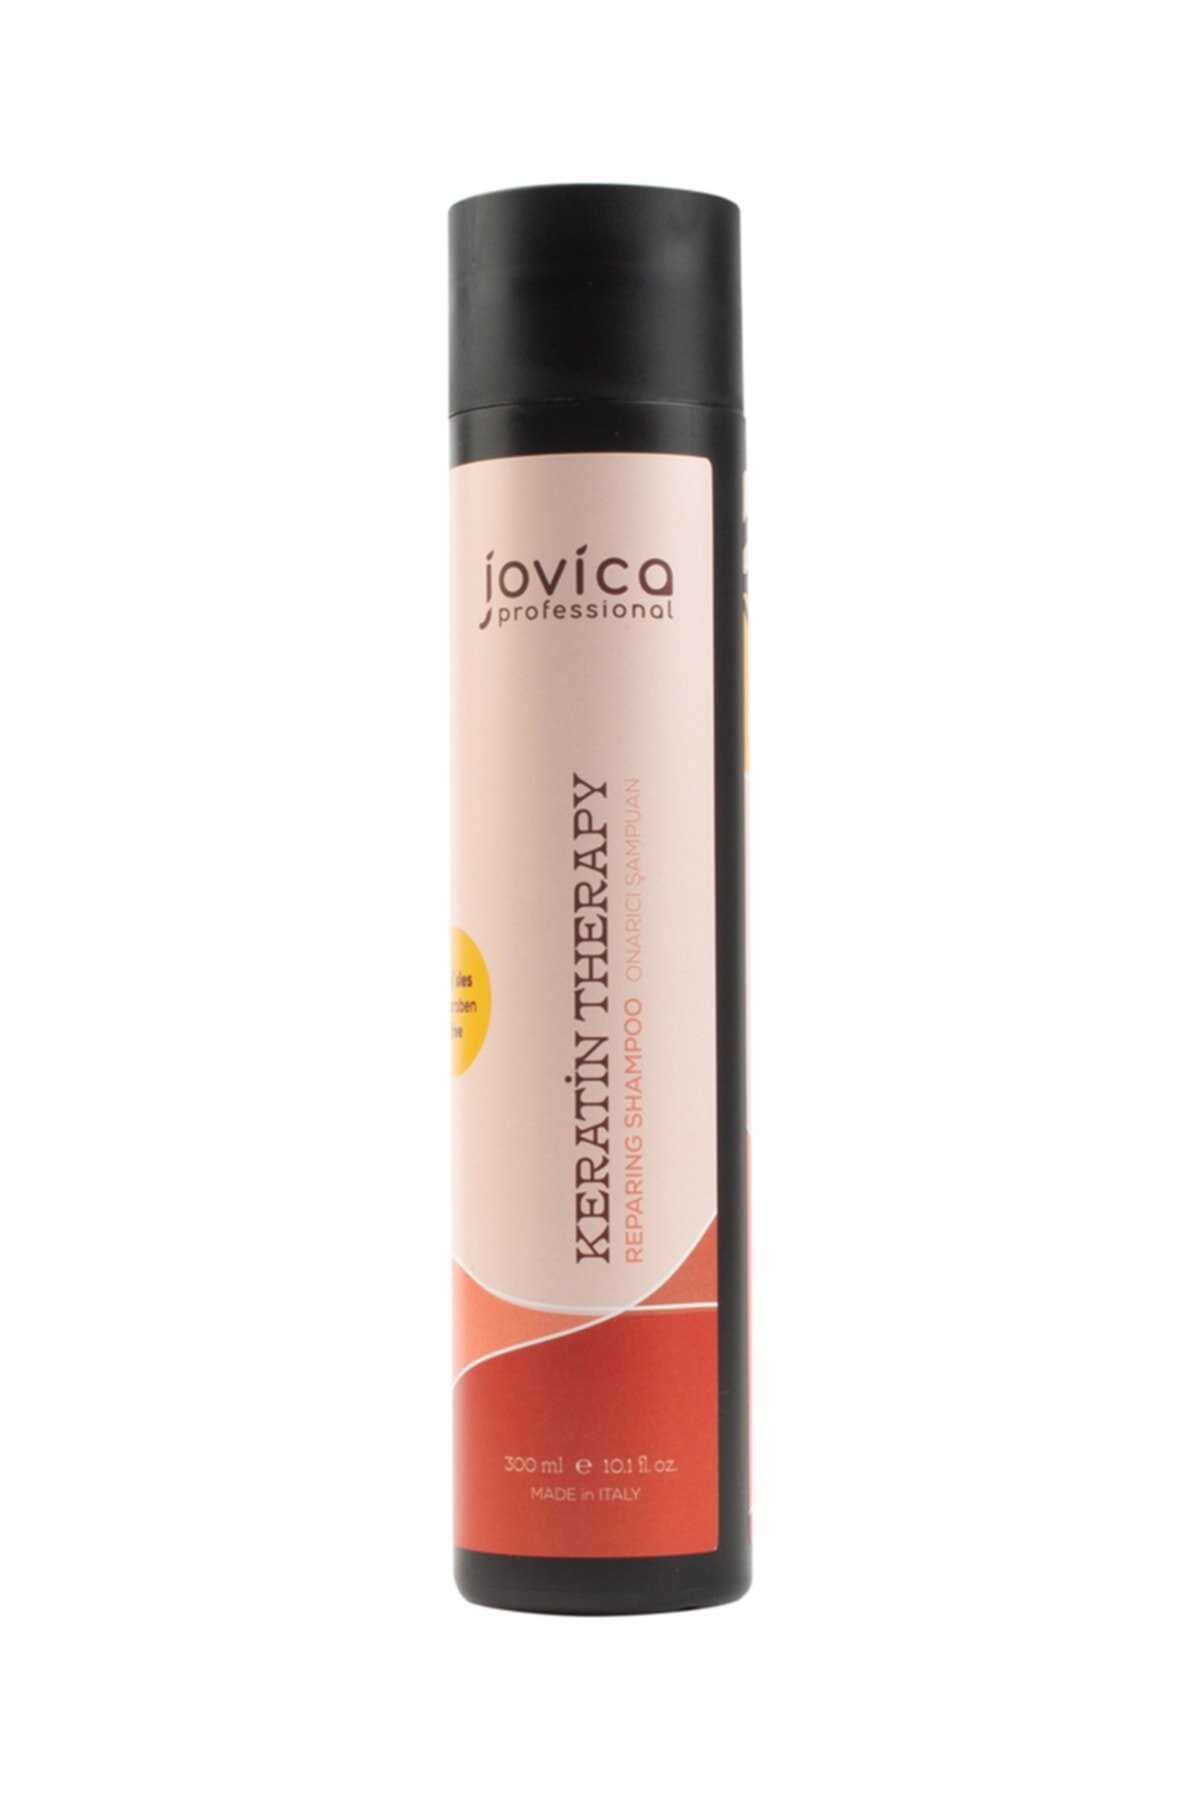 Jovica Keratin Therapy Parabensiz Keratin Şampuan 300 ml Made in ITALY